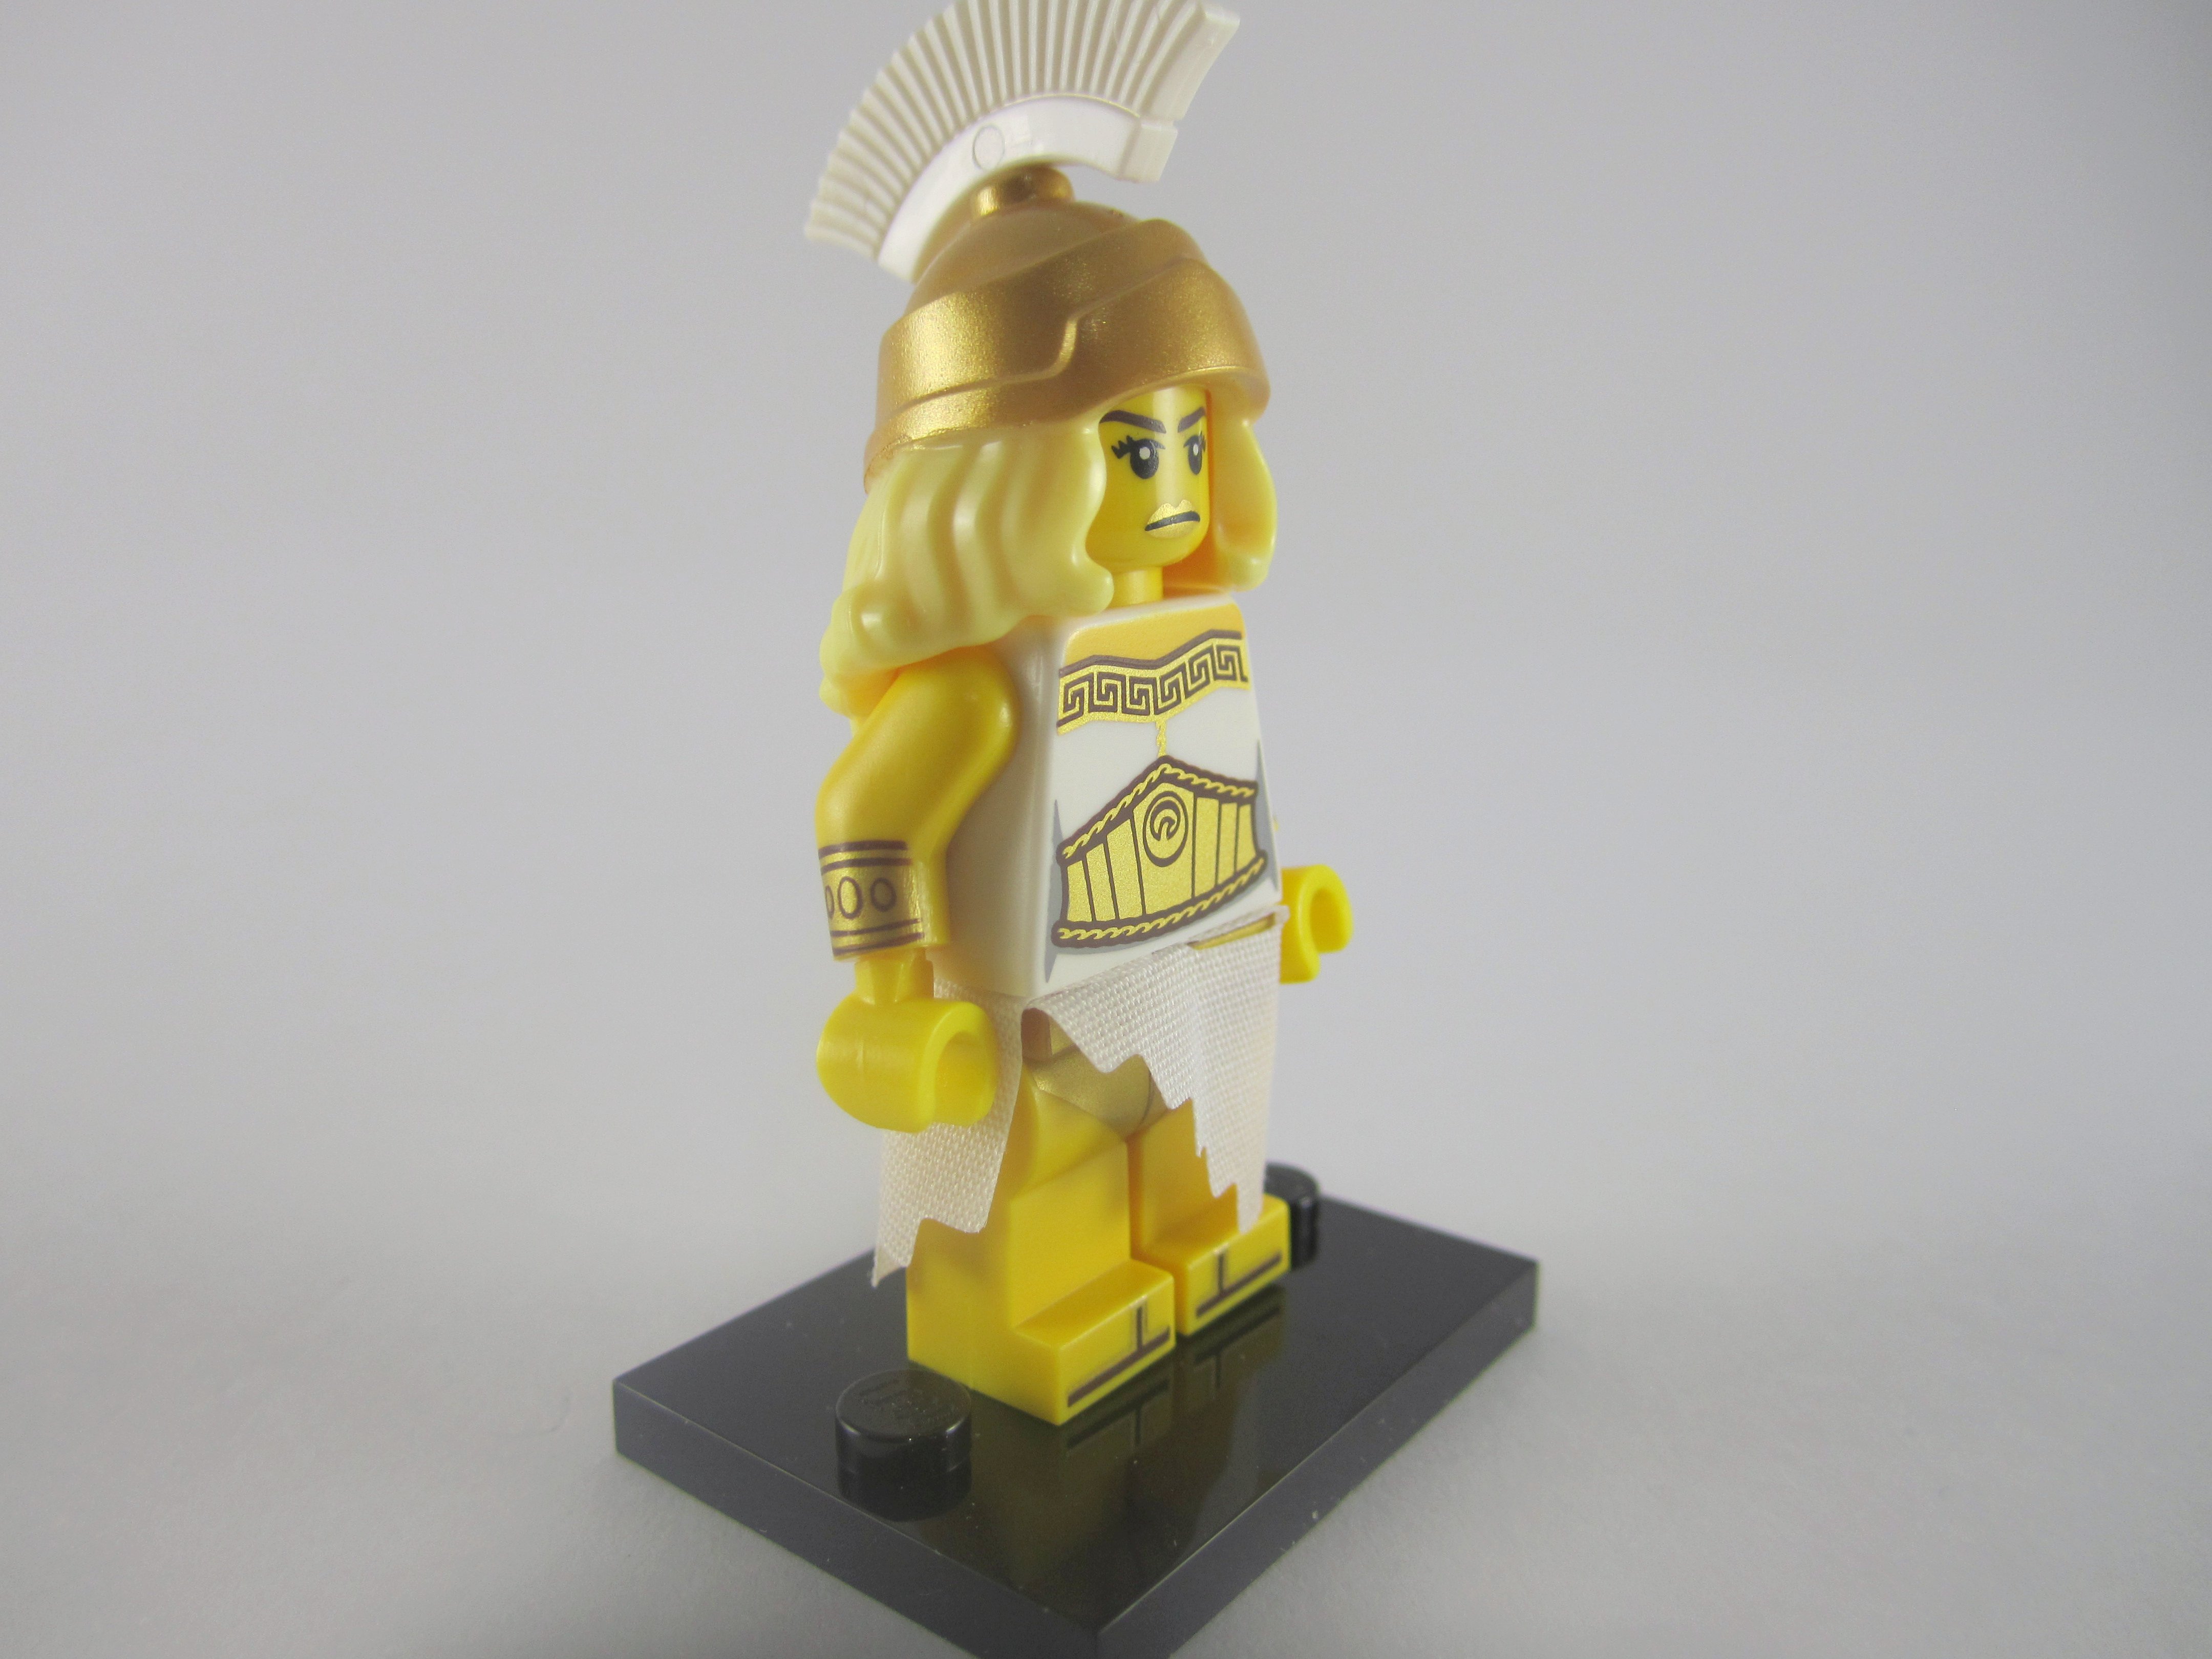 Battle Goddess Details about   LEGO Minifigure Series 12 71007 